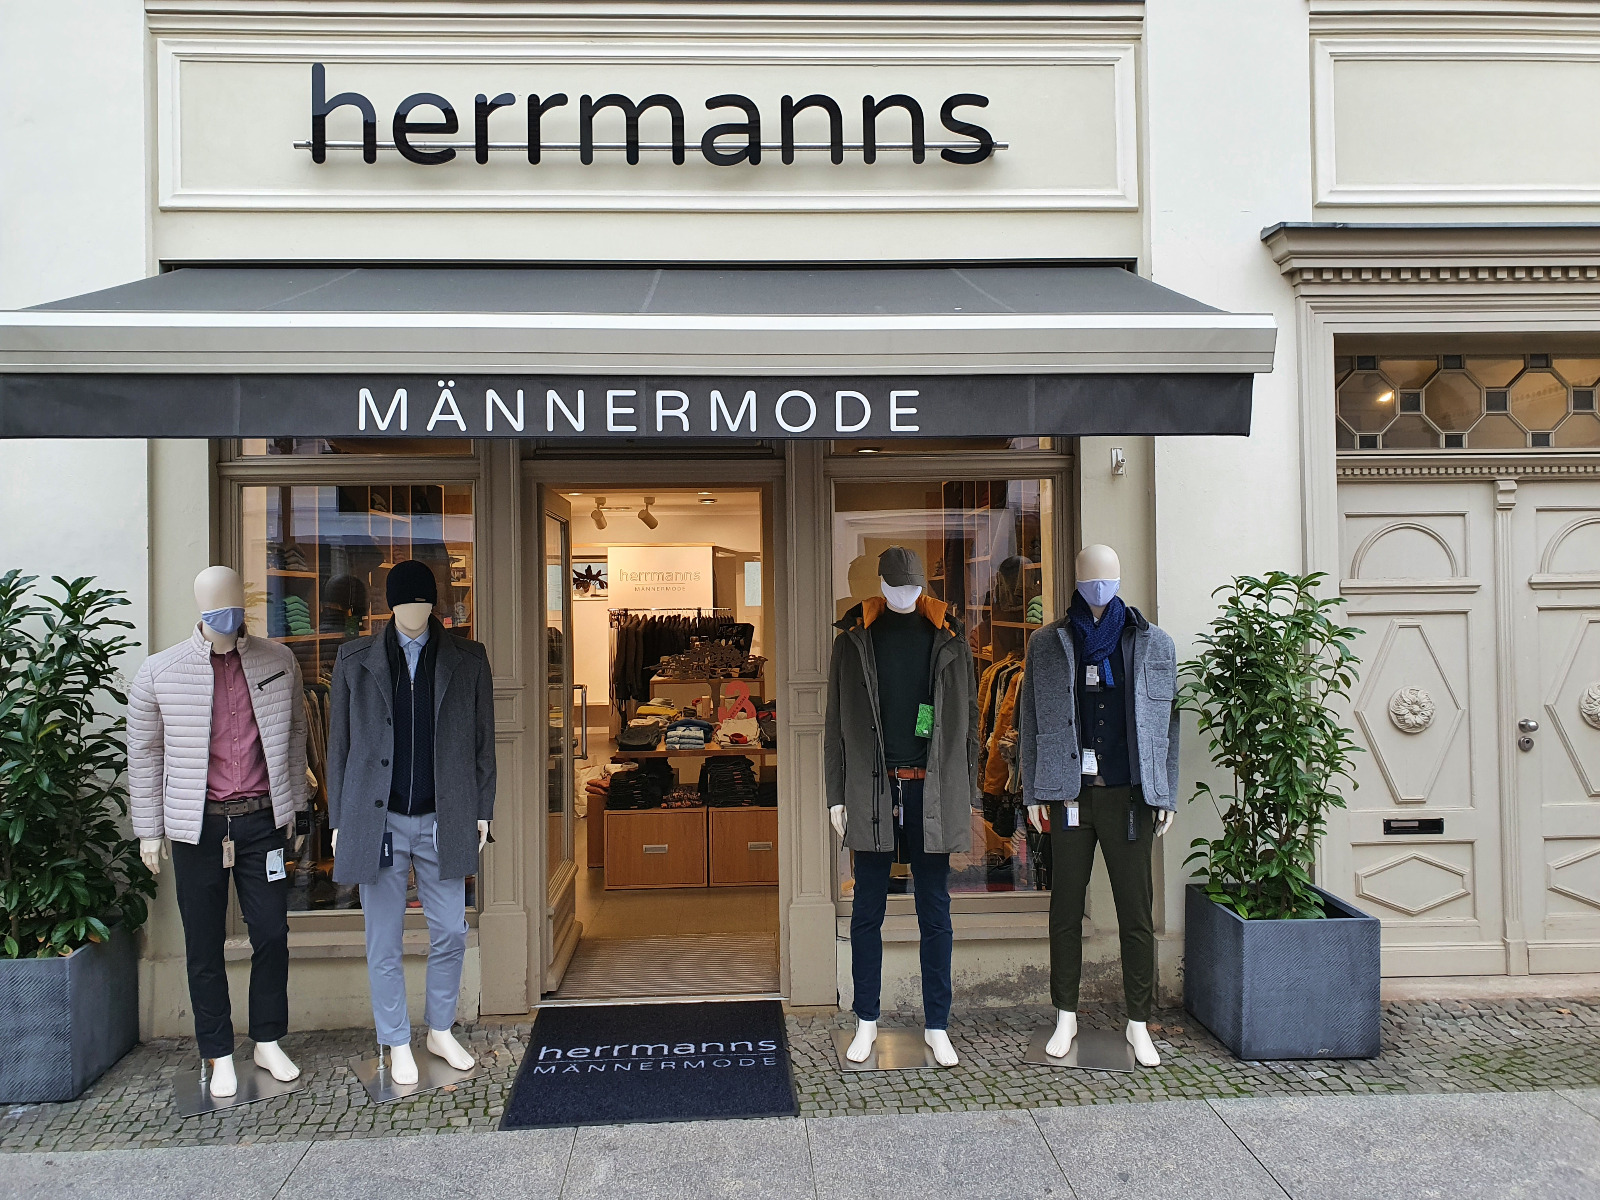 herrmanns - Männermode in Potsdam